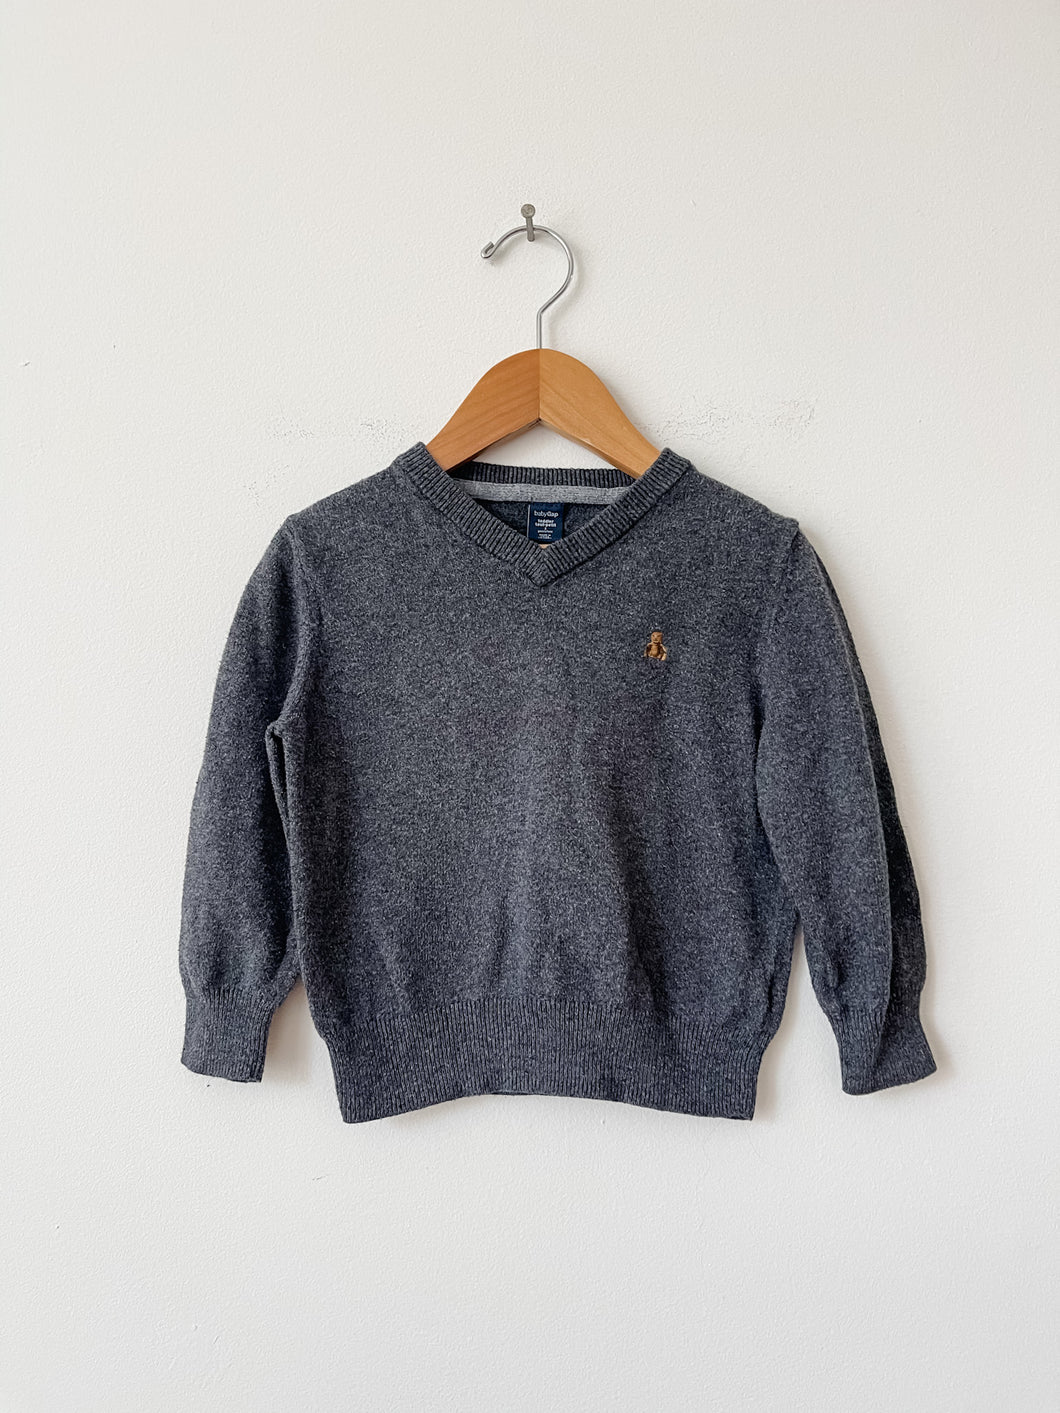 Boys Grey Gap Sweater Size 2T